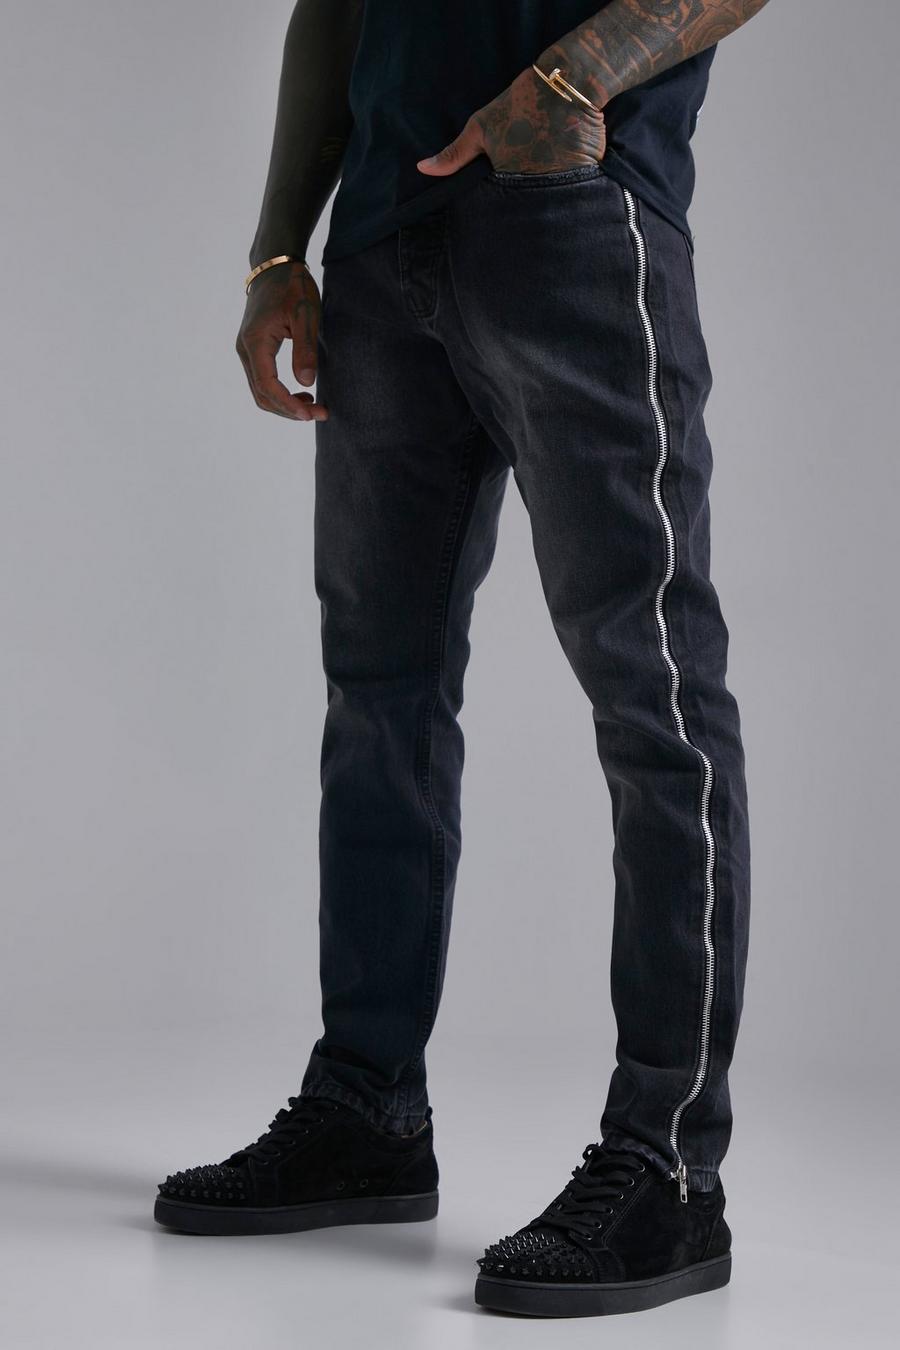 Black nero ג'ינס מבד קשיח בגזרה צרה עם רוכסן לאורך הרגל